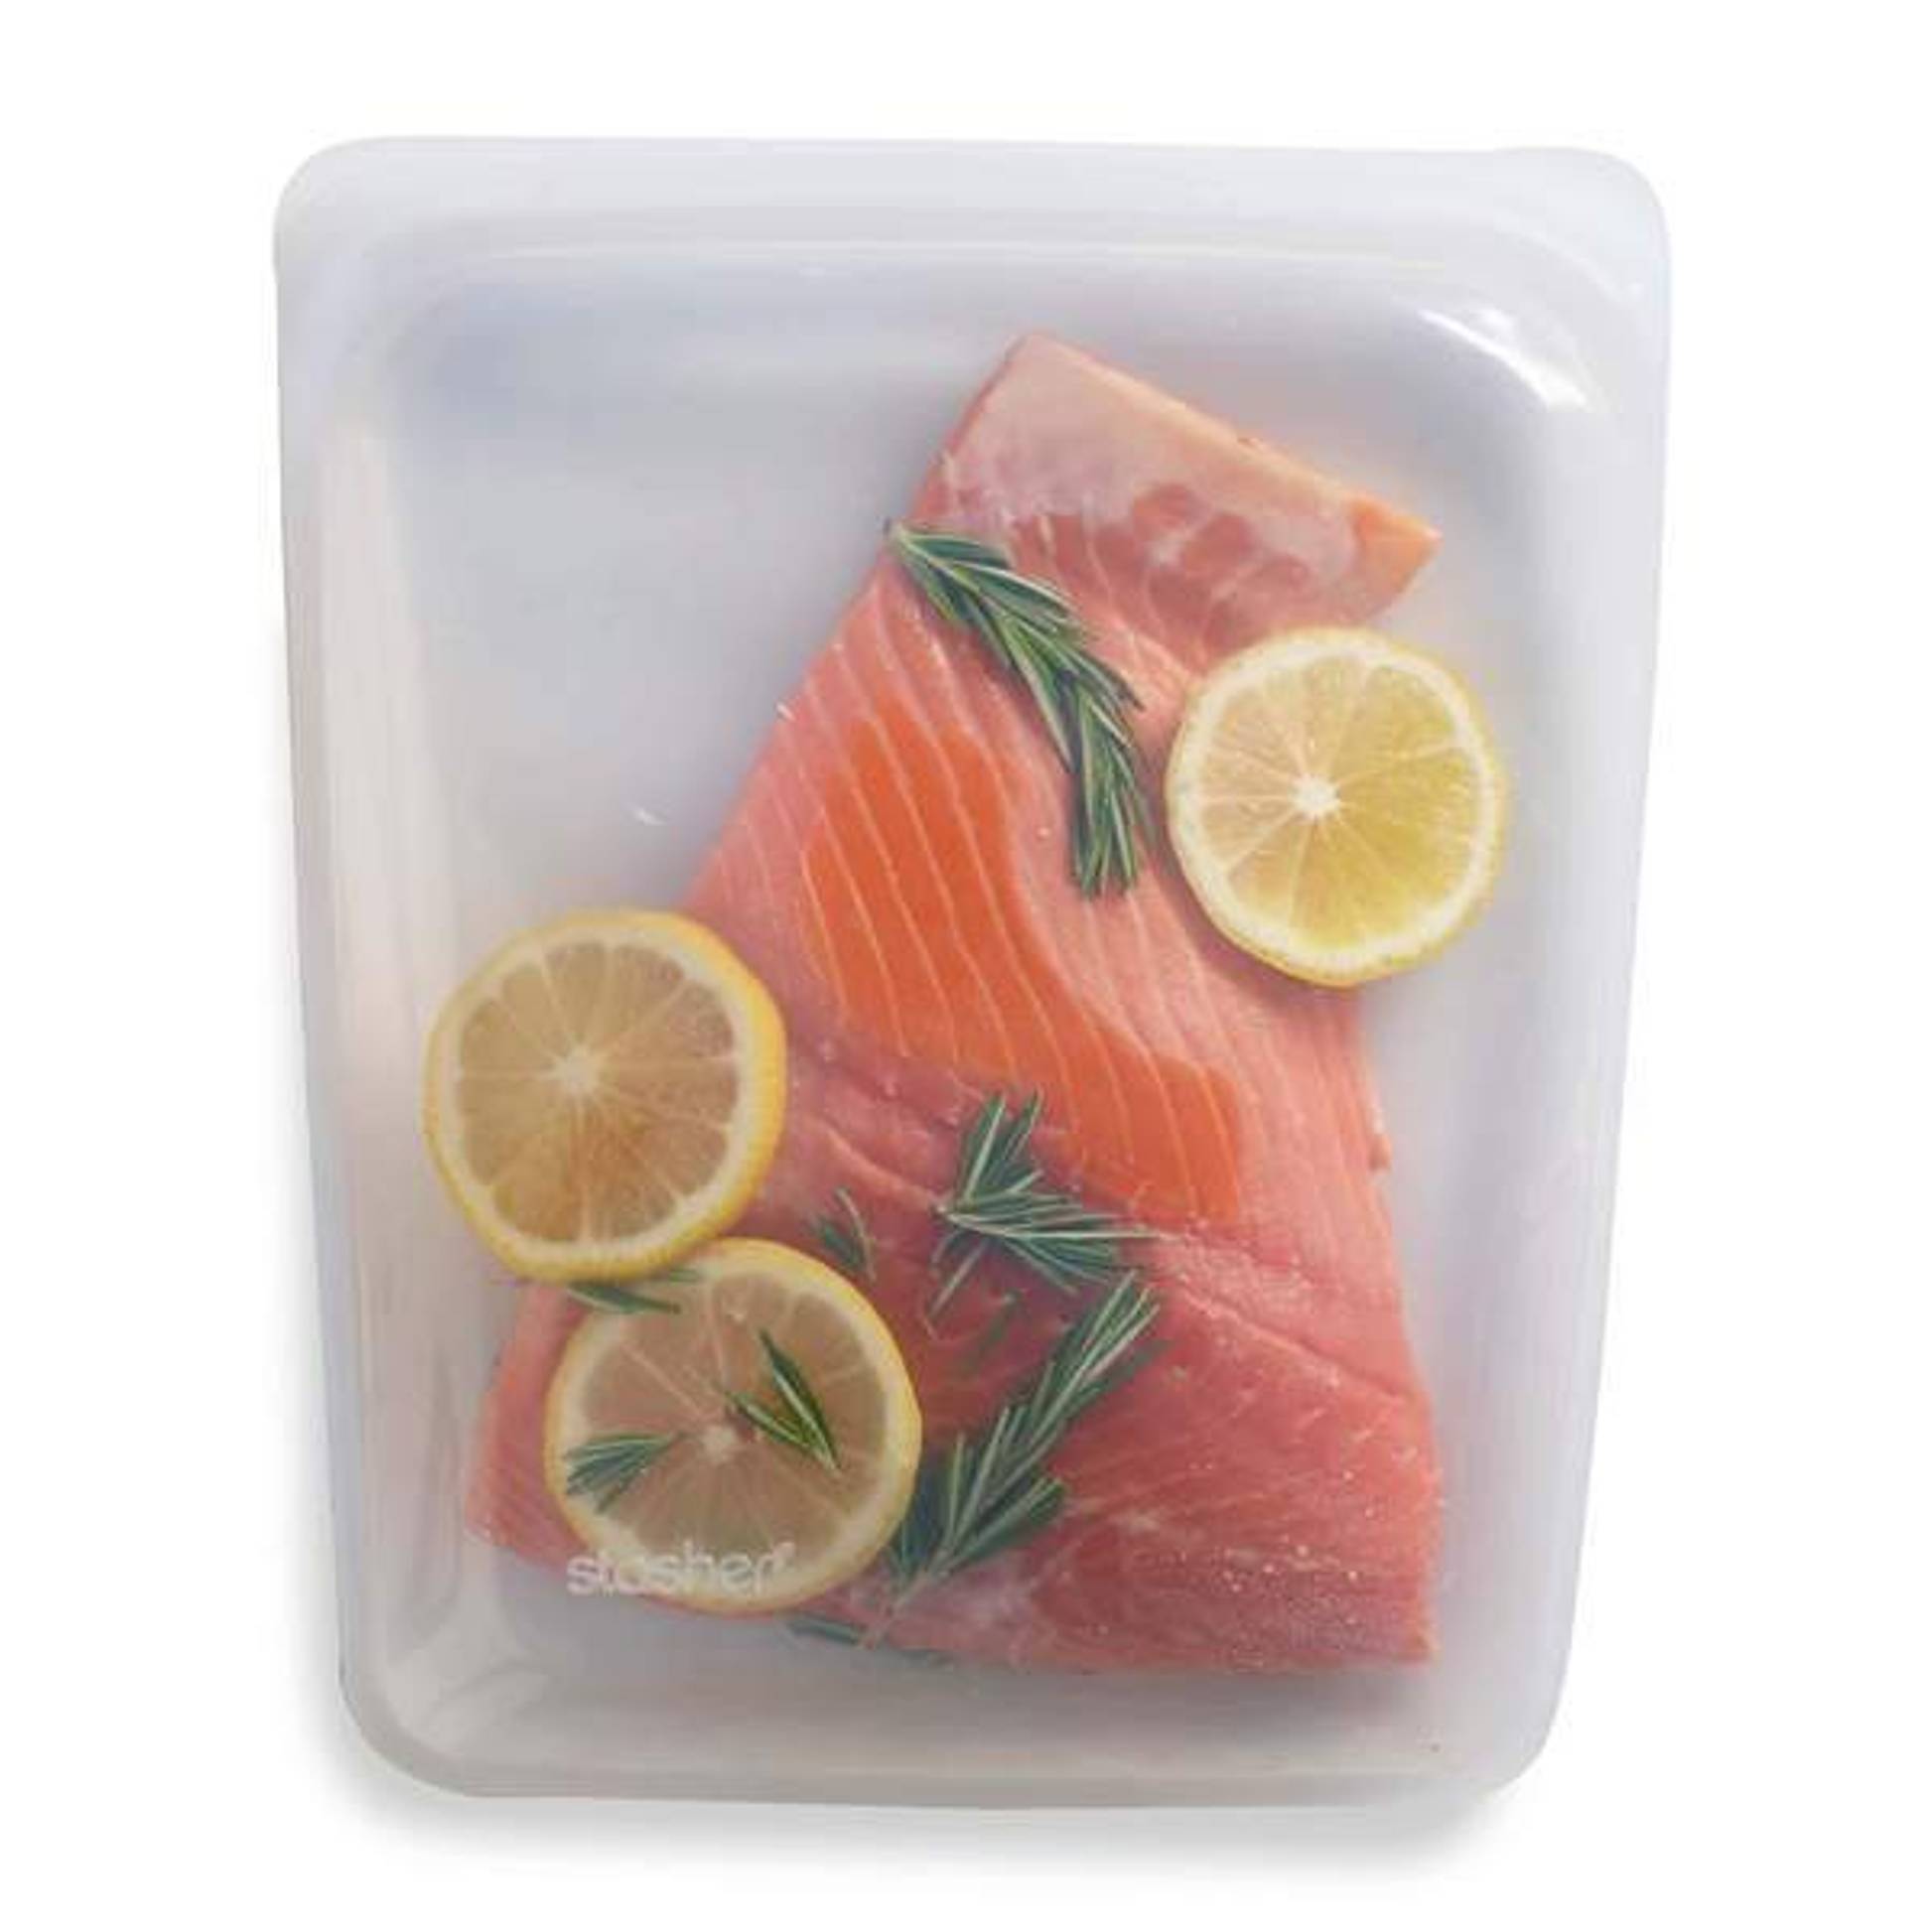 https://cld.accentuate.io/7274992304317/1671133829802/anova-culinary-sous-vide-silicone-bag-half-gallon-salmon.jpg?v=1671133829802&options=w_1946